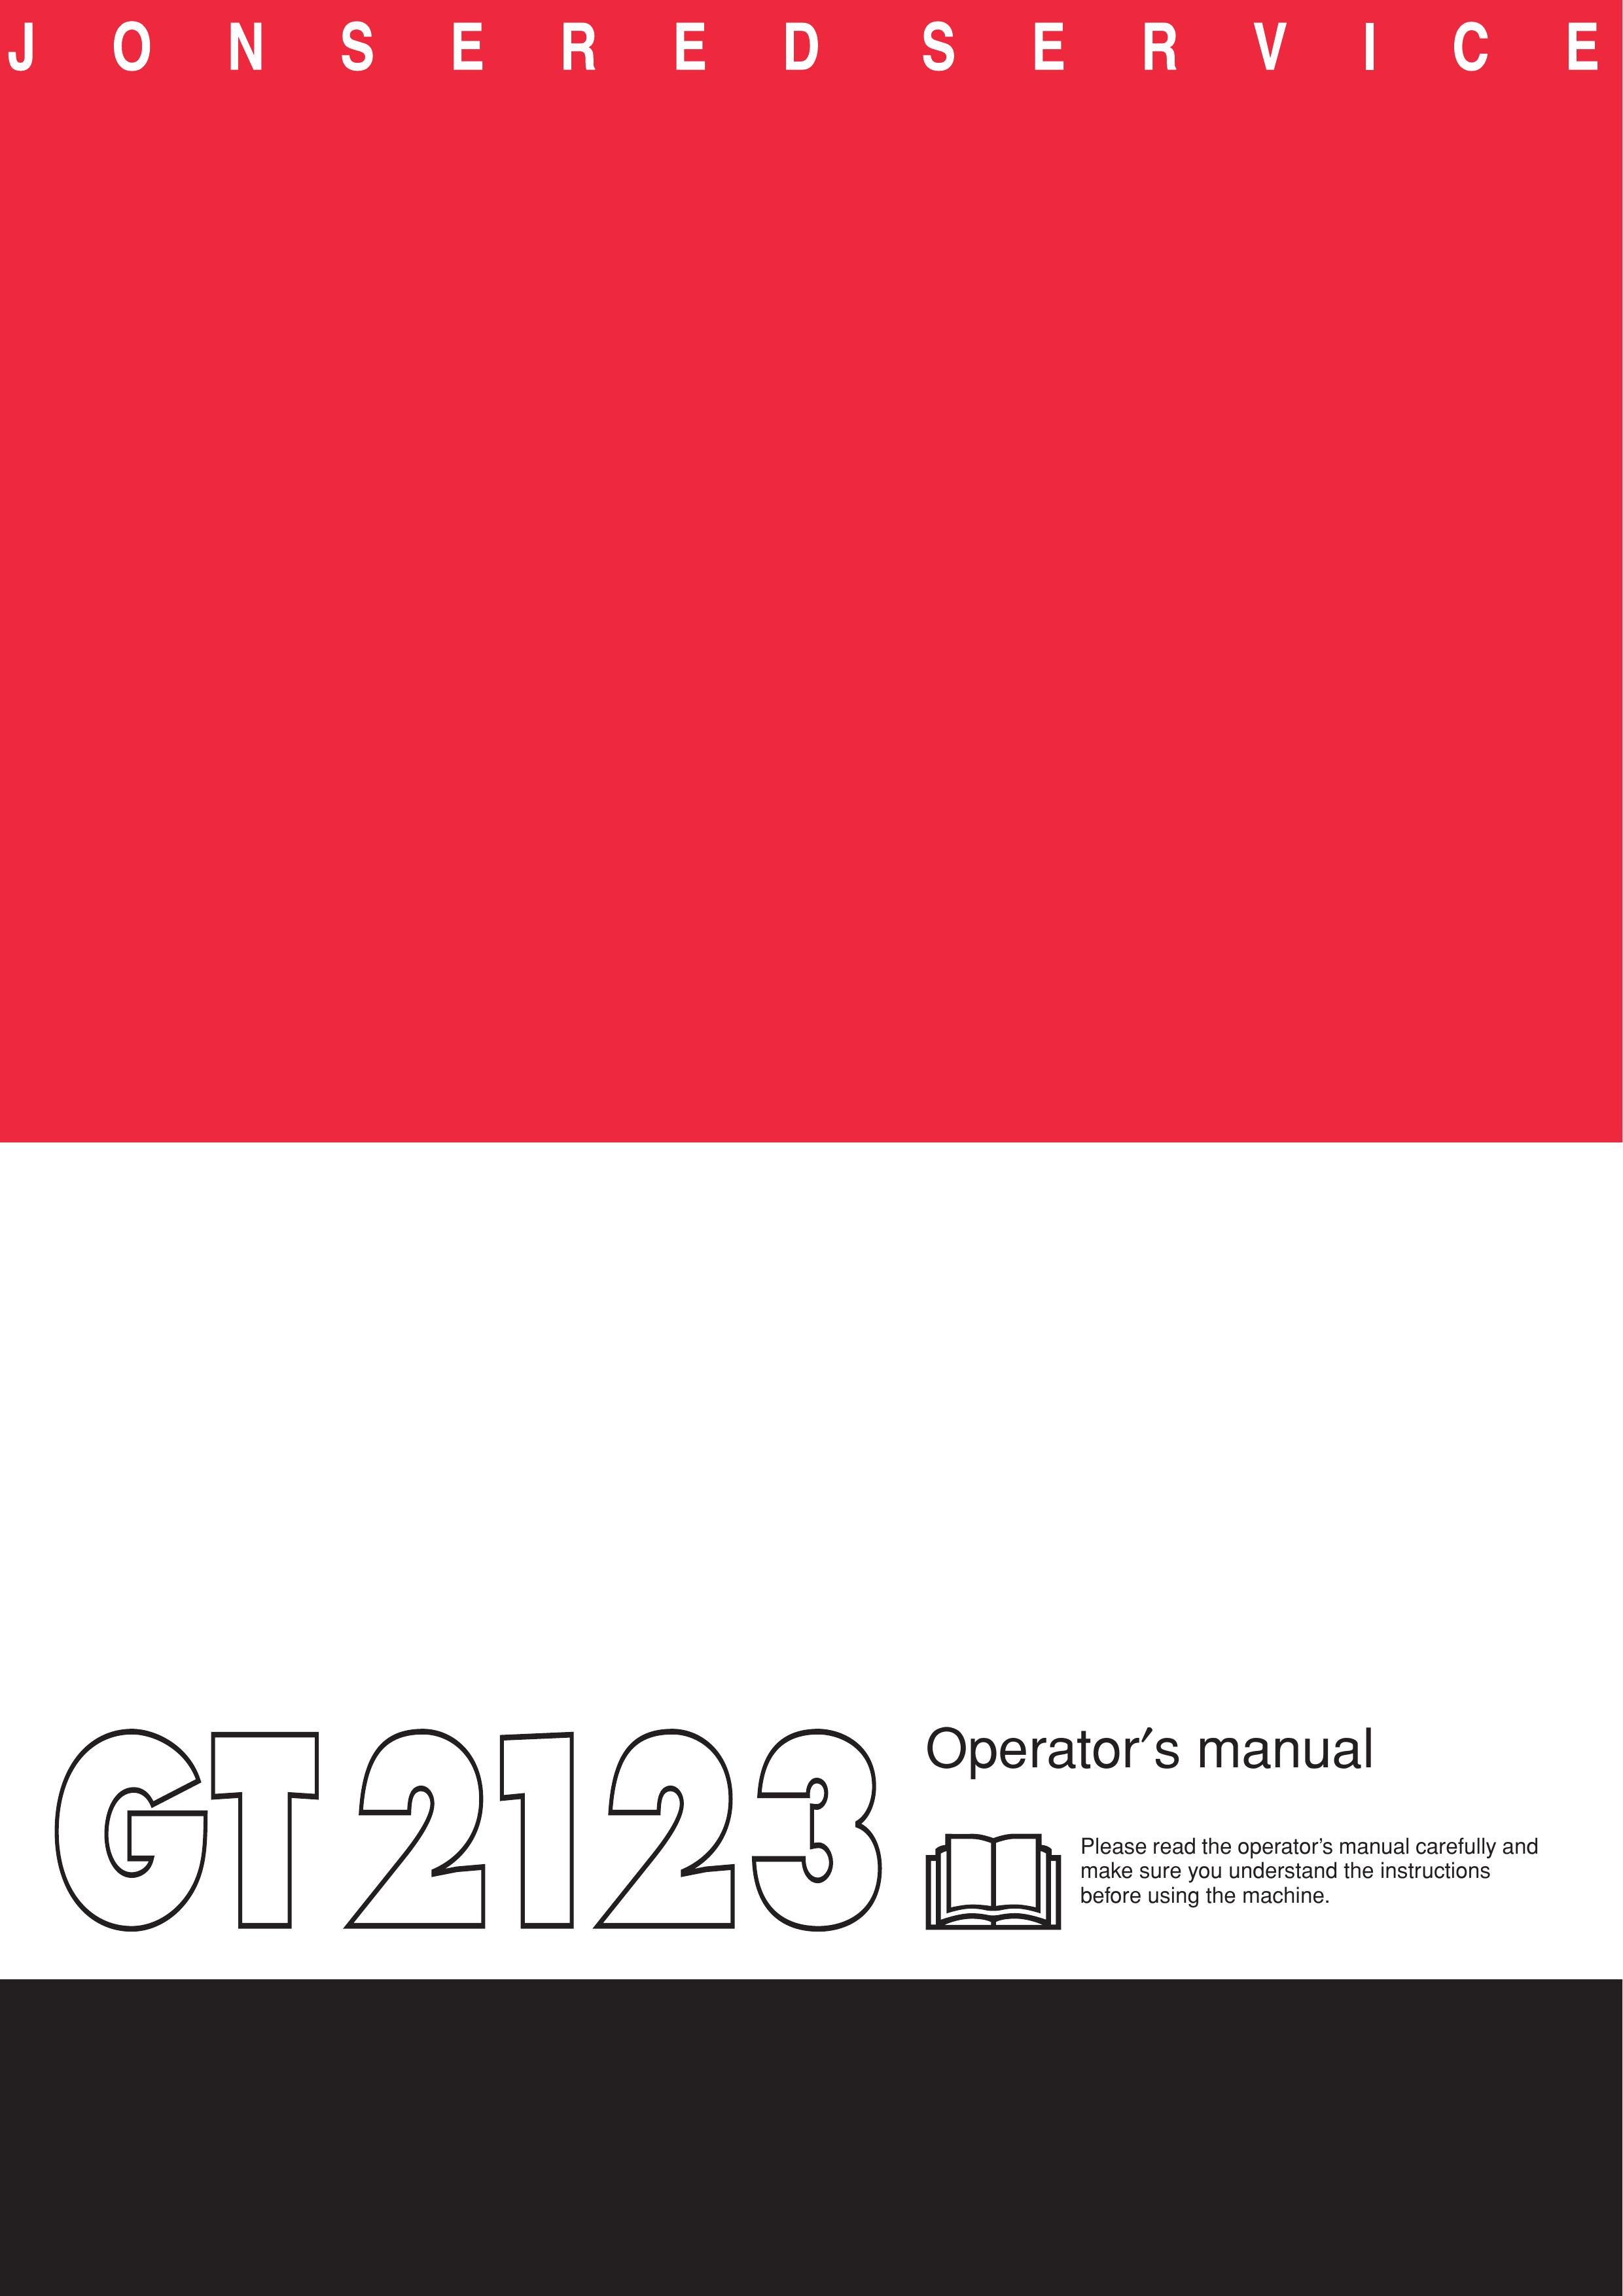 Jonsered GT2123 Brush Cutter User Manual